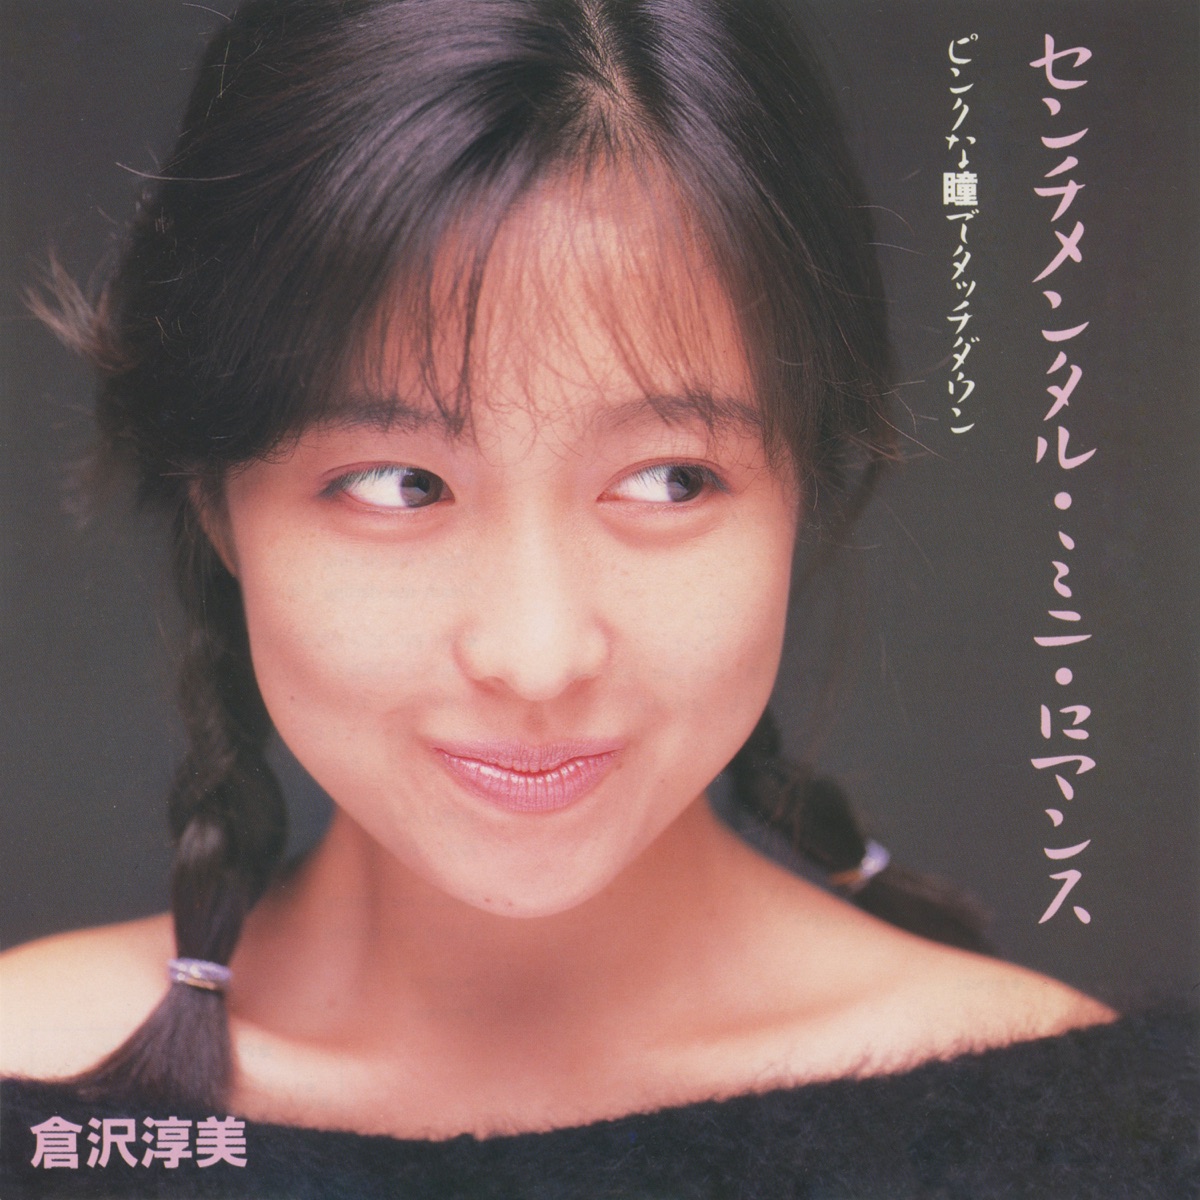 Private ATSUMI KURASAWA, Vol. 2 (+1) - 倉沢淳美のアルバム - Apple 